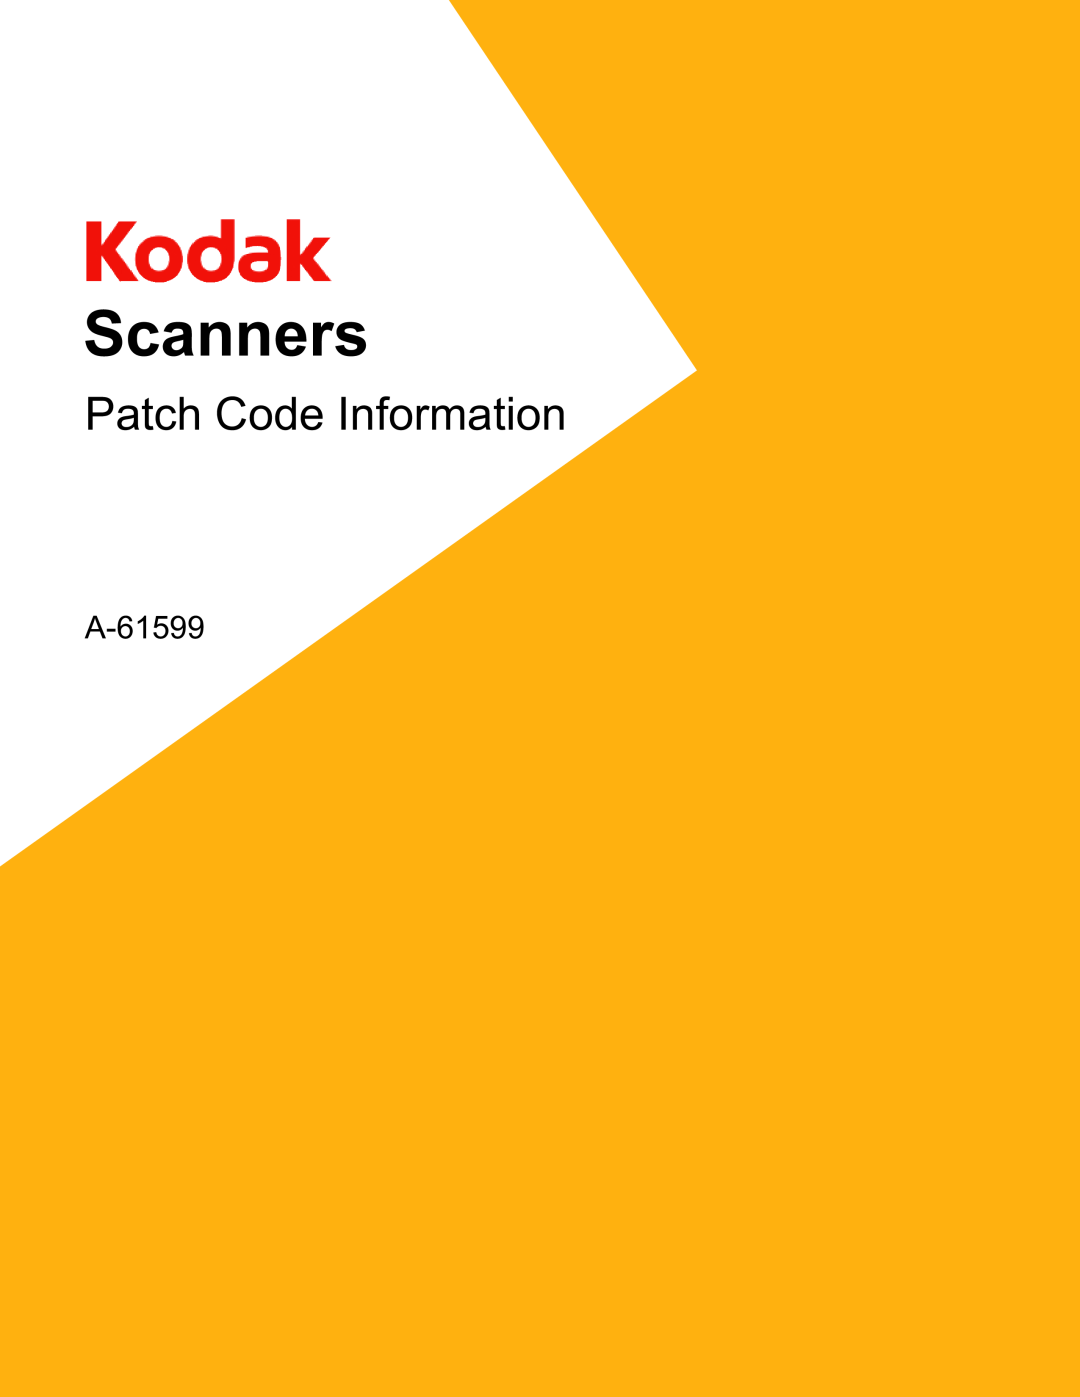 Kodak manual Scanners, Patch Code Information, CAT No. 845 A-61599 October 